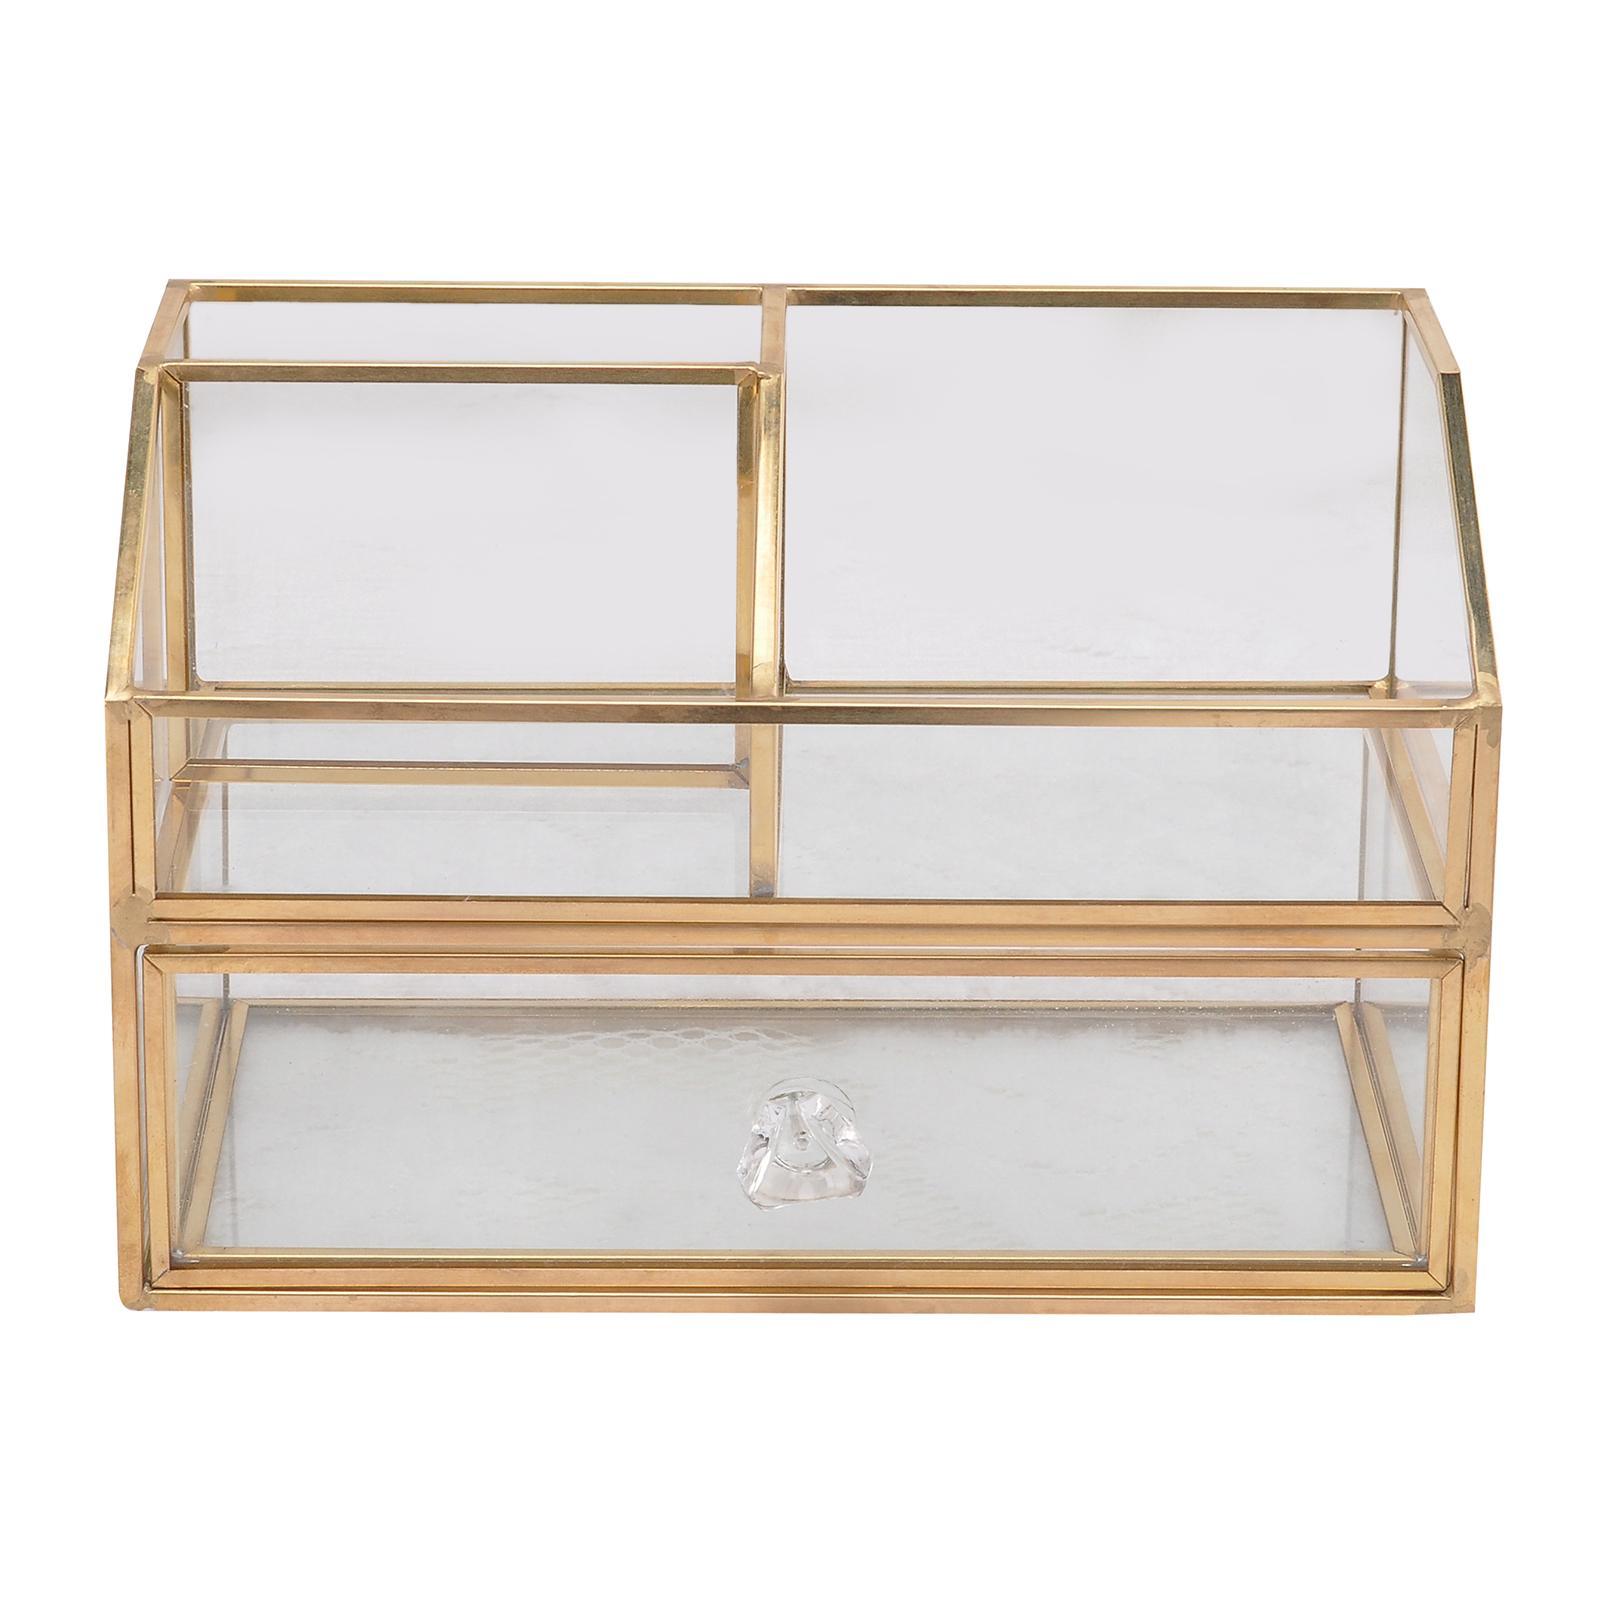 Cosmetics Display Box Jewelry Case Holder Organizer Container Decorative Box